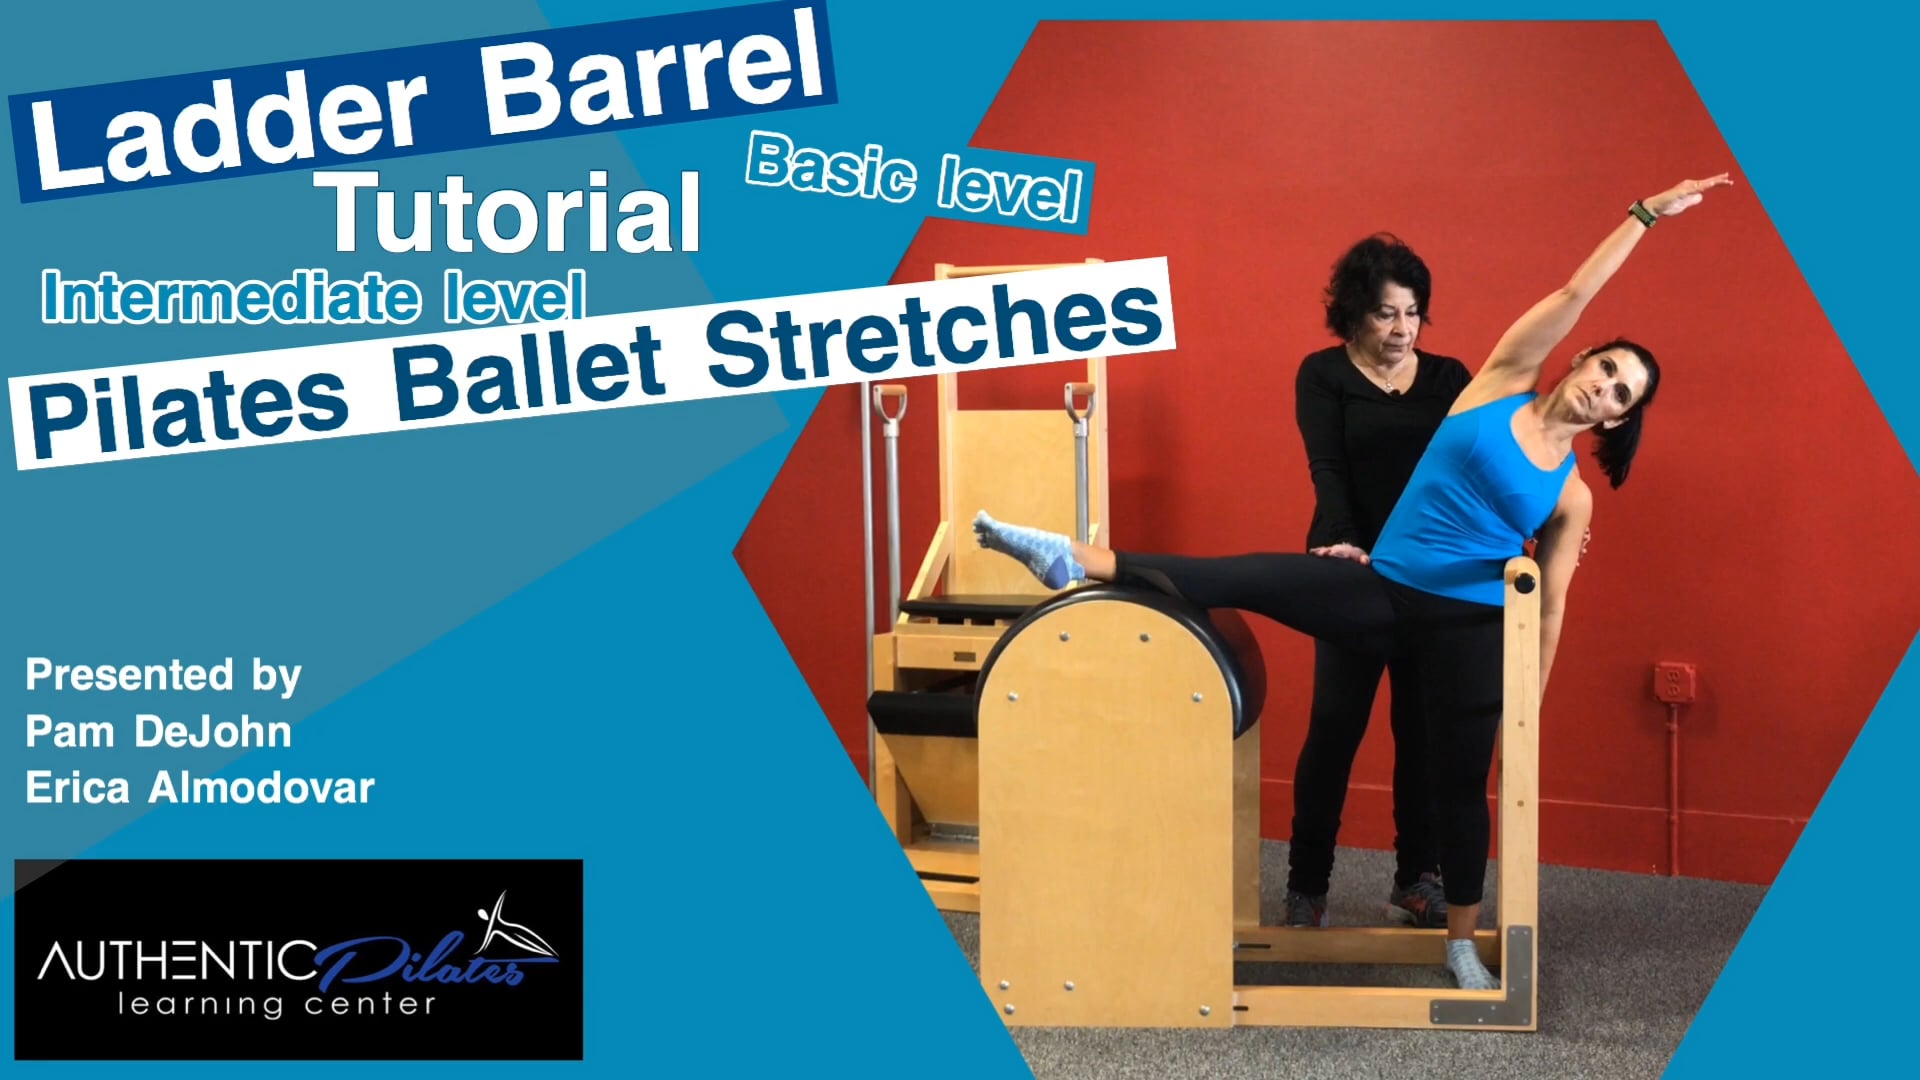 Ladder Barrel Ballet Stretches Tutorial Authentic Pilates Center 